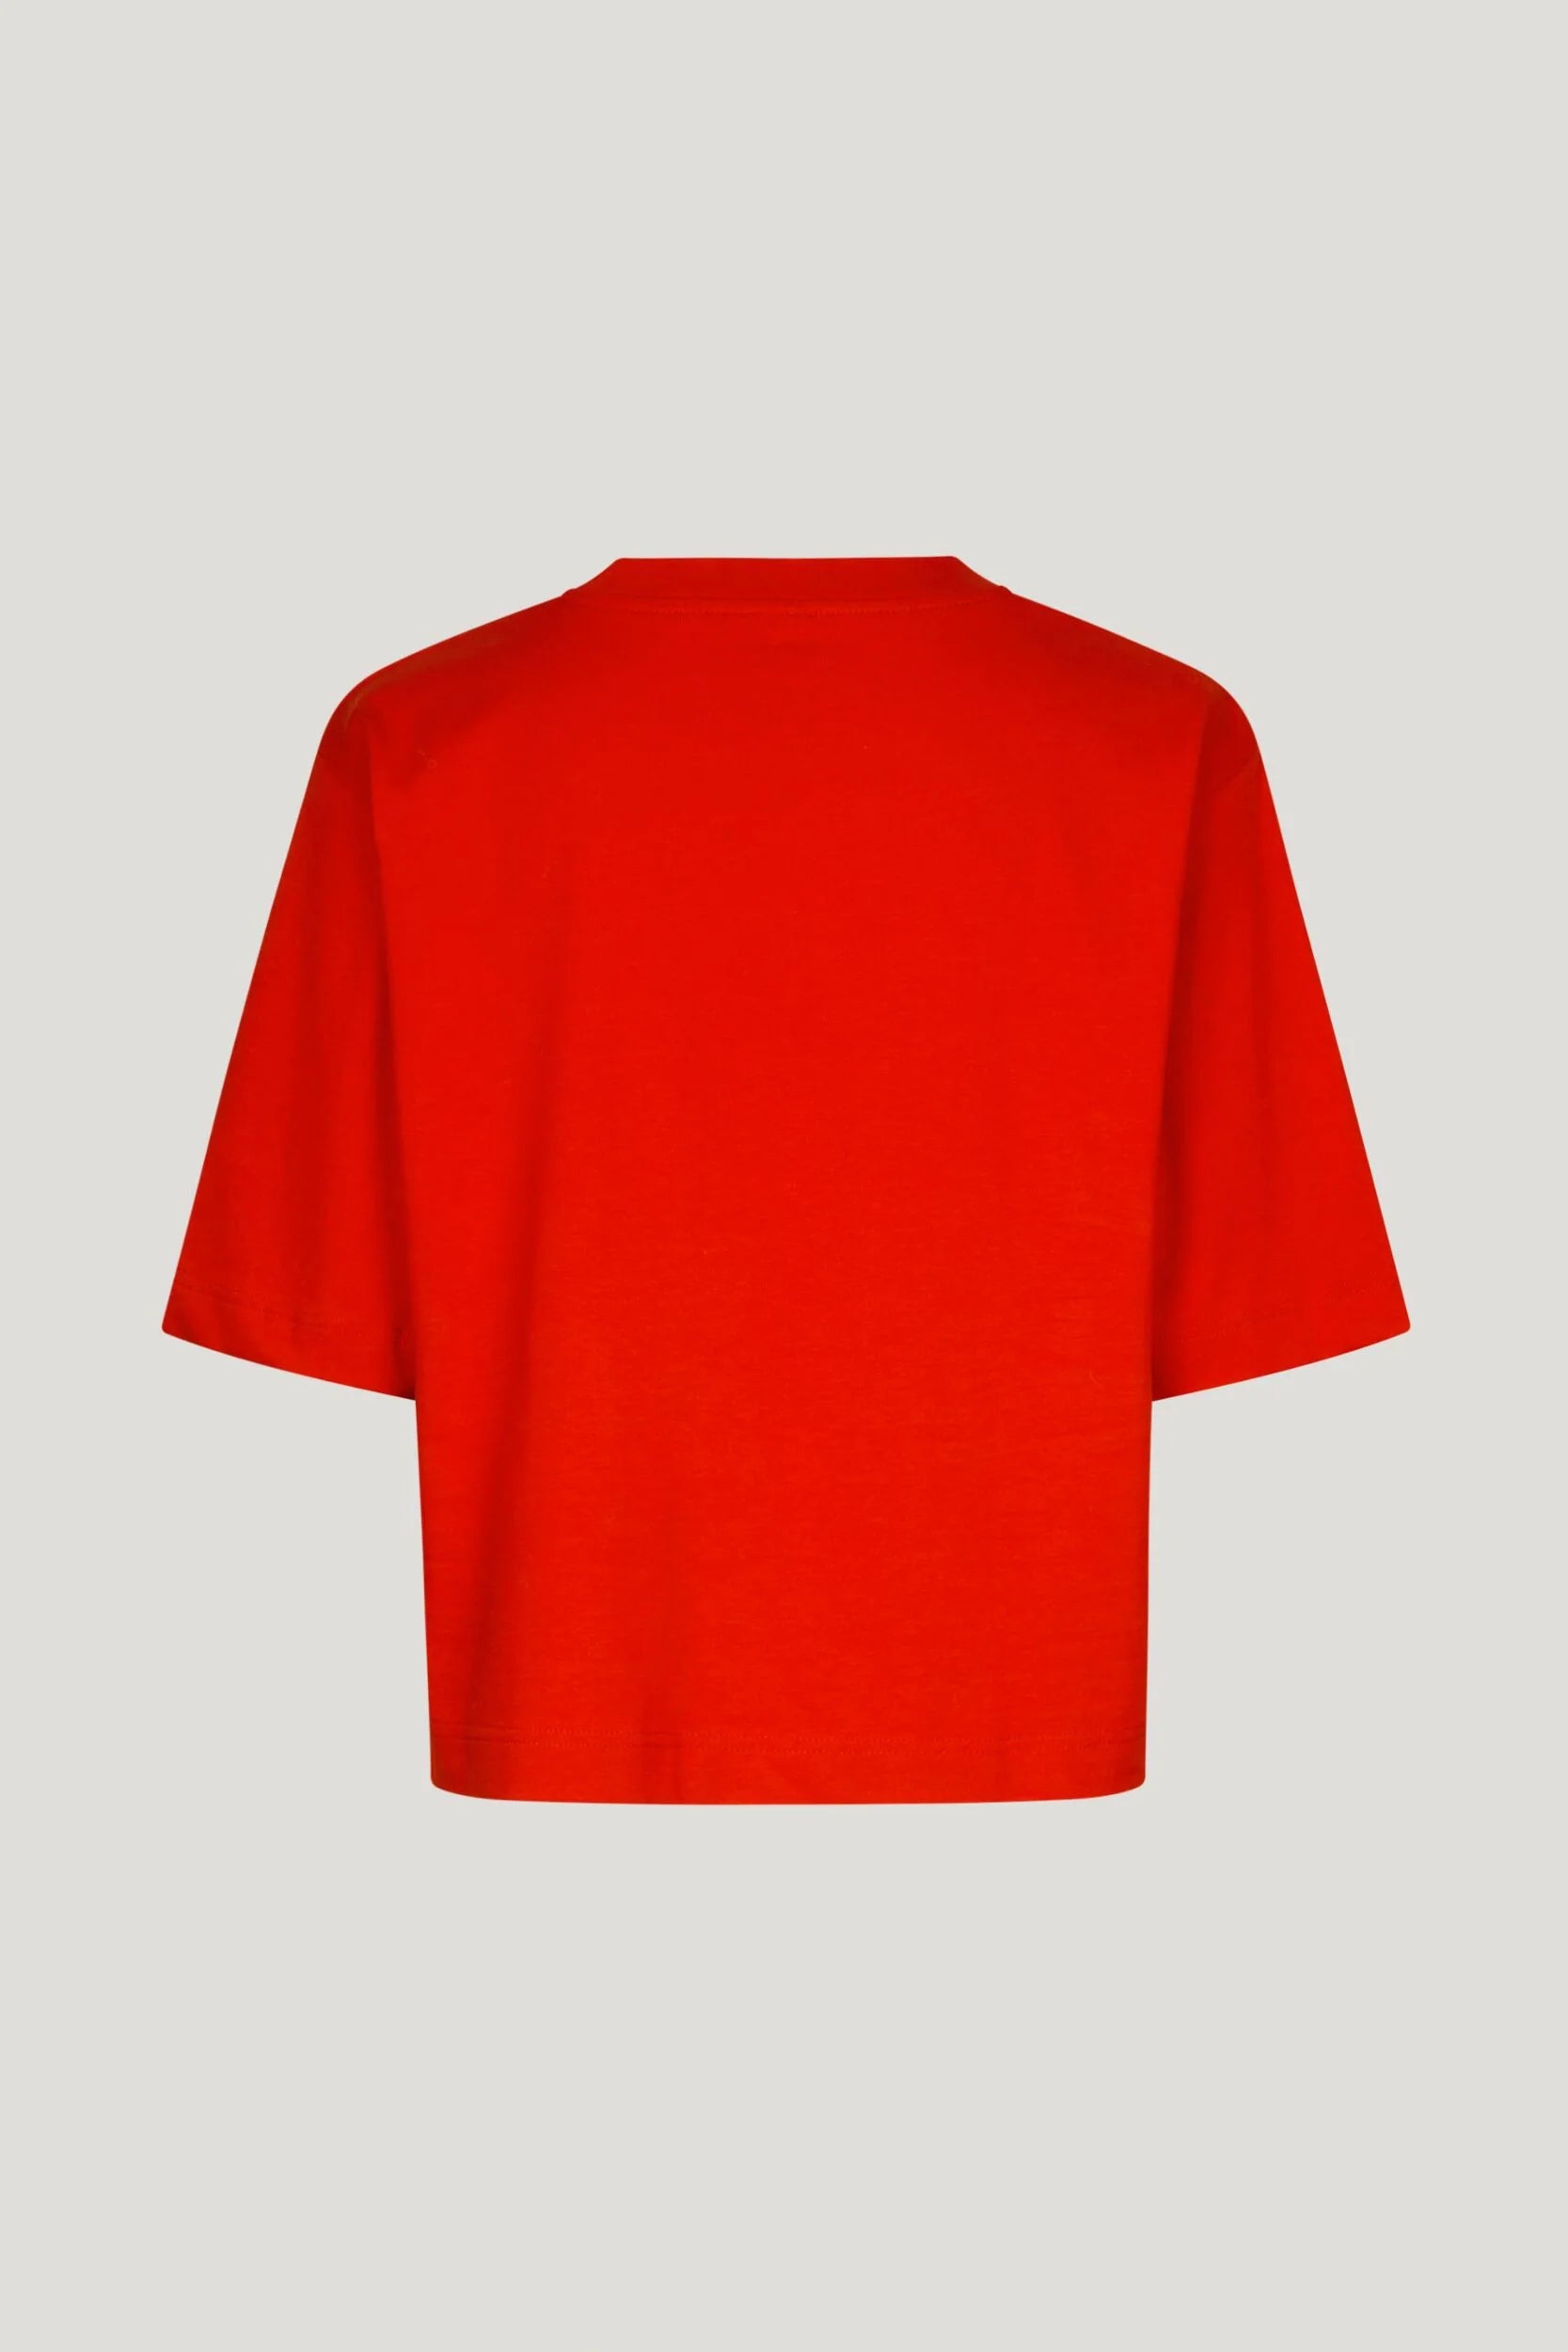 Baum - Jian T-Shirt